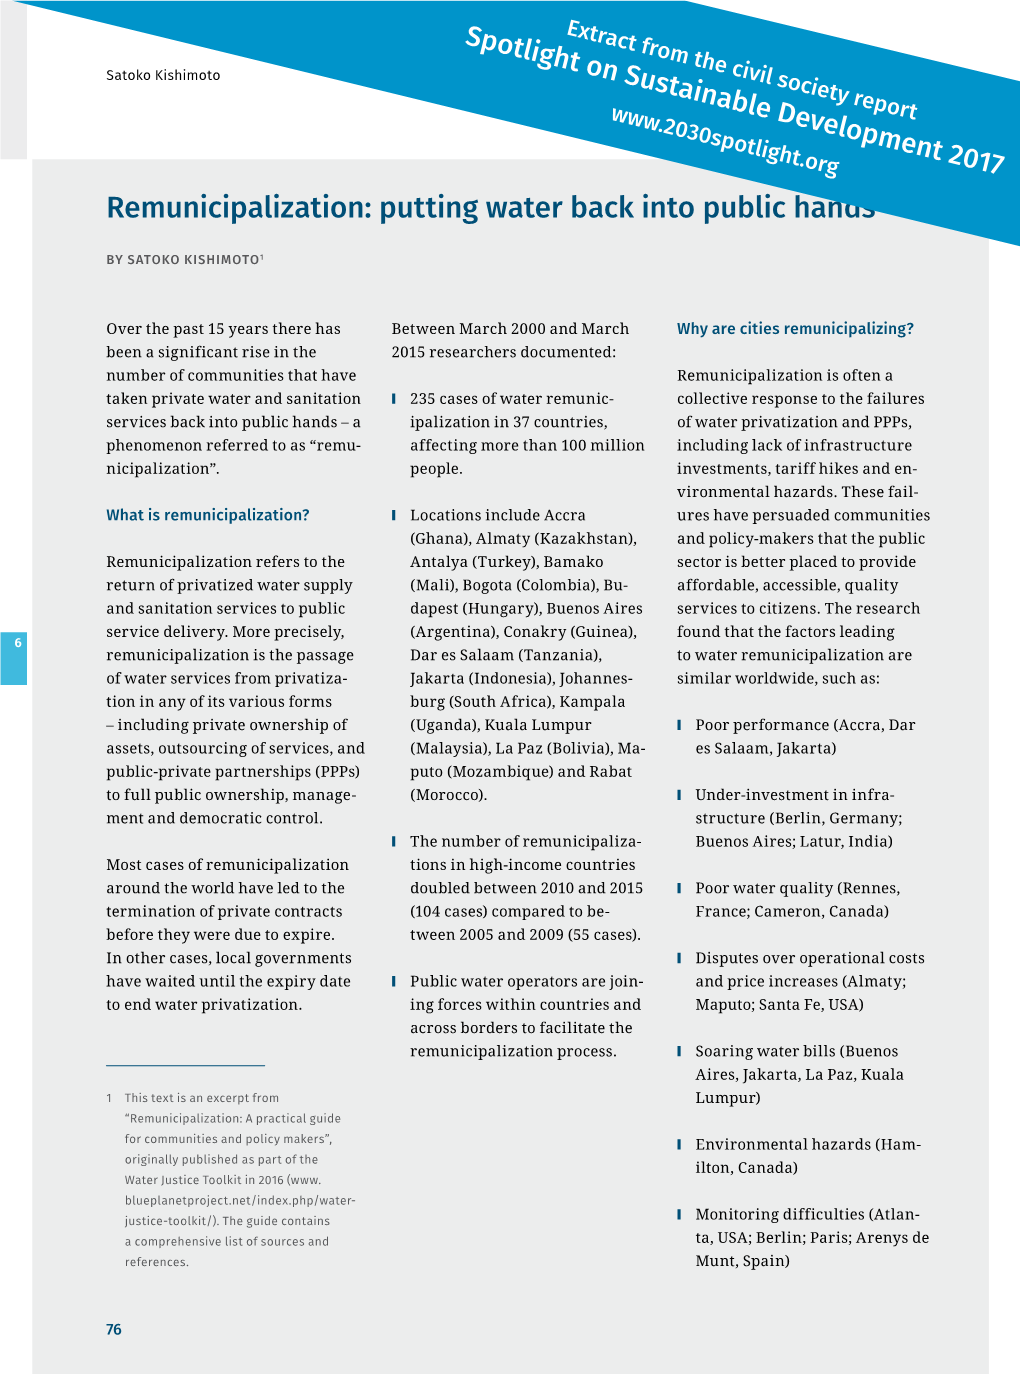 Remunicipalization: Putting Water Back Into Public Hands